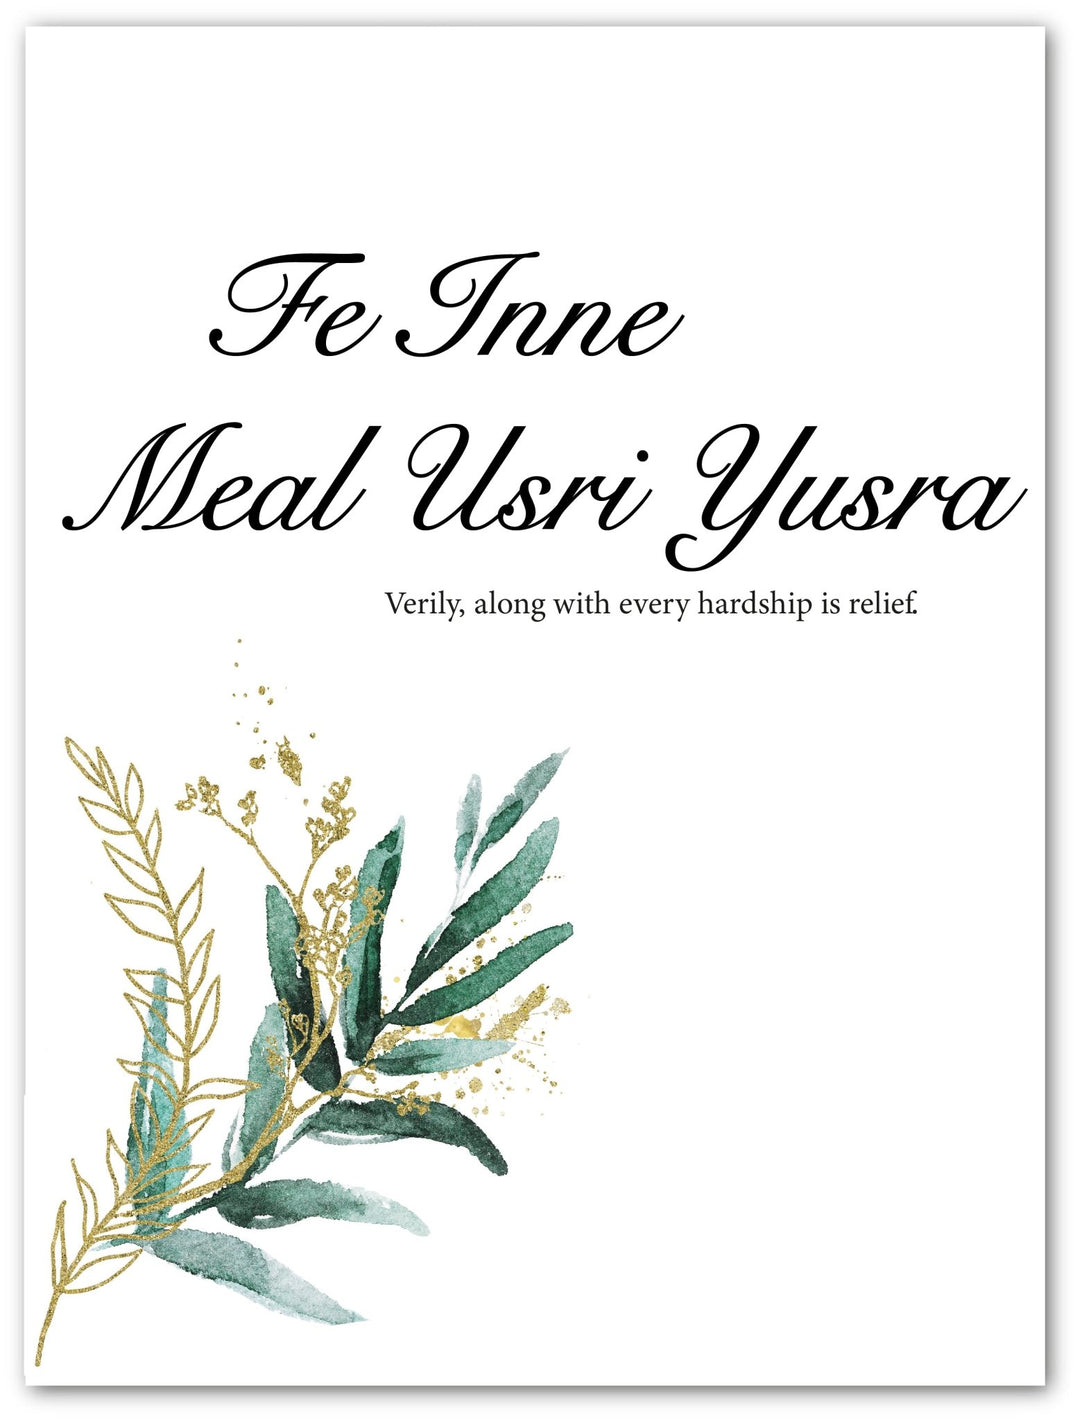 Fe Inne Meal Usri Yusra - Beautiful Wall